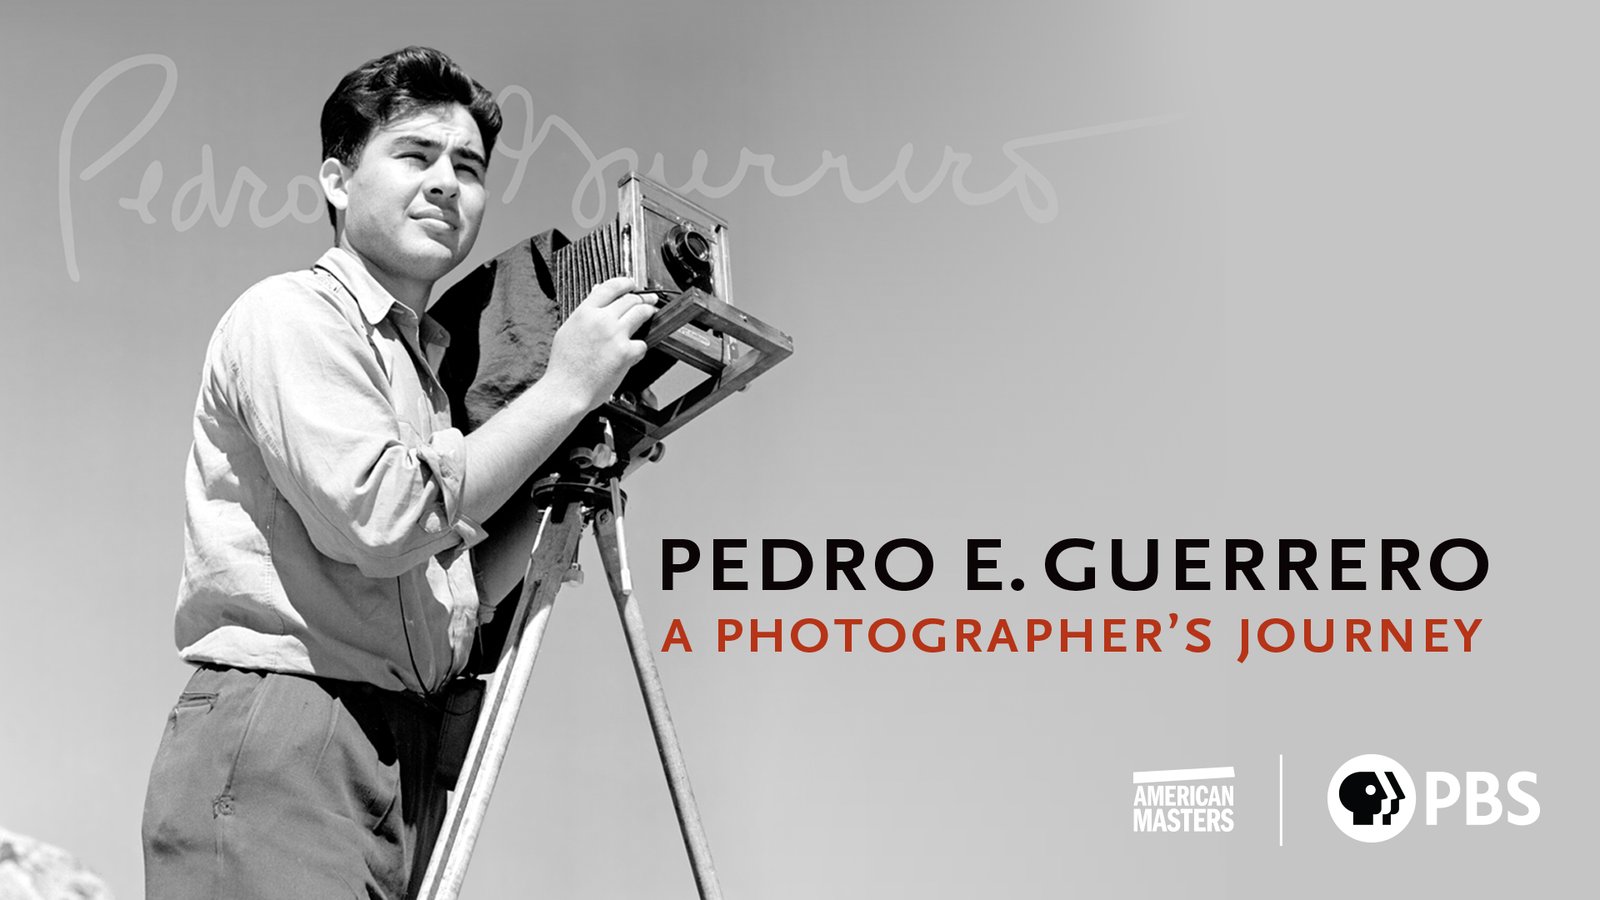 Pedro E. Guerrero - A Photographer's Journey